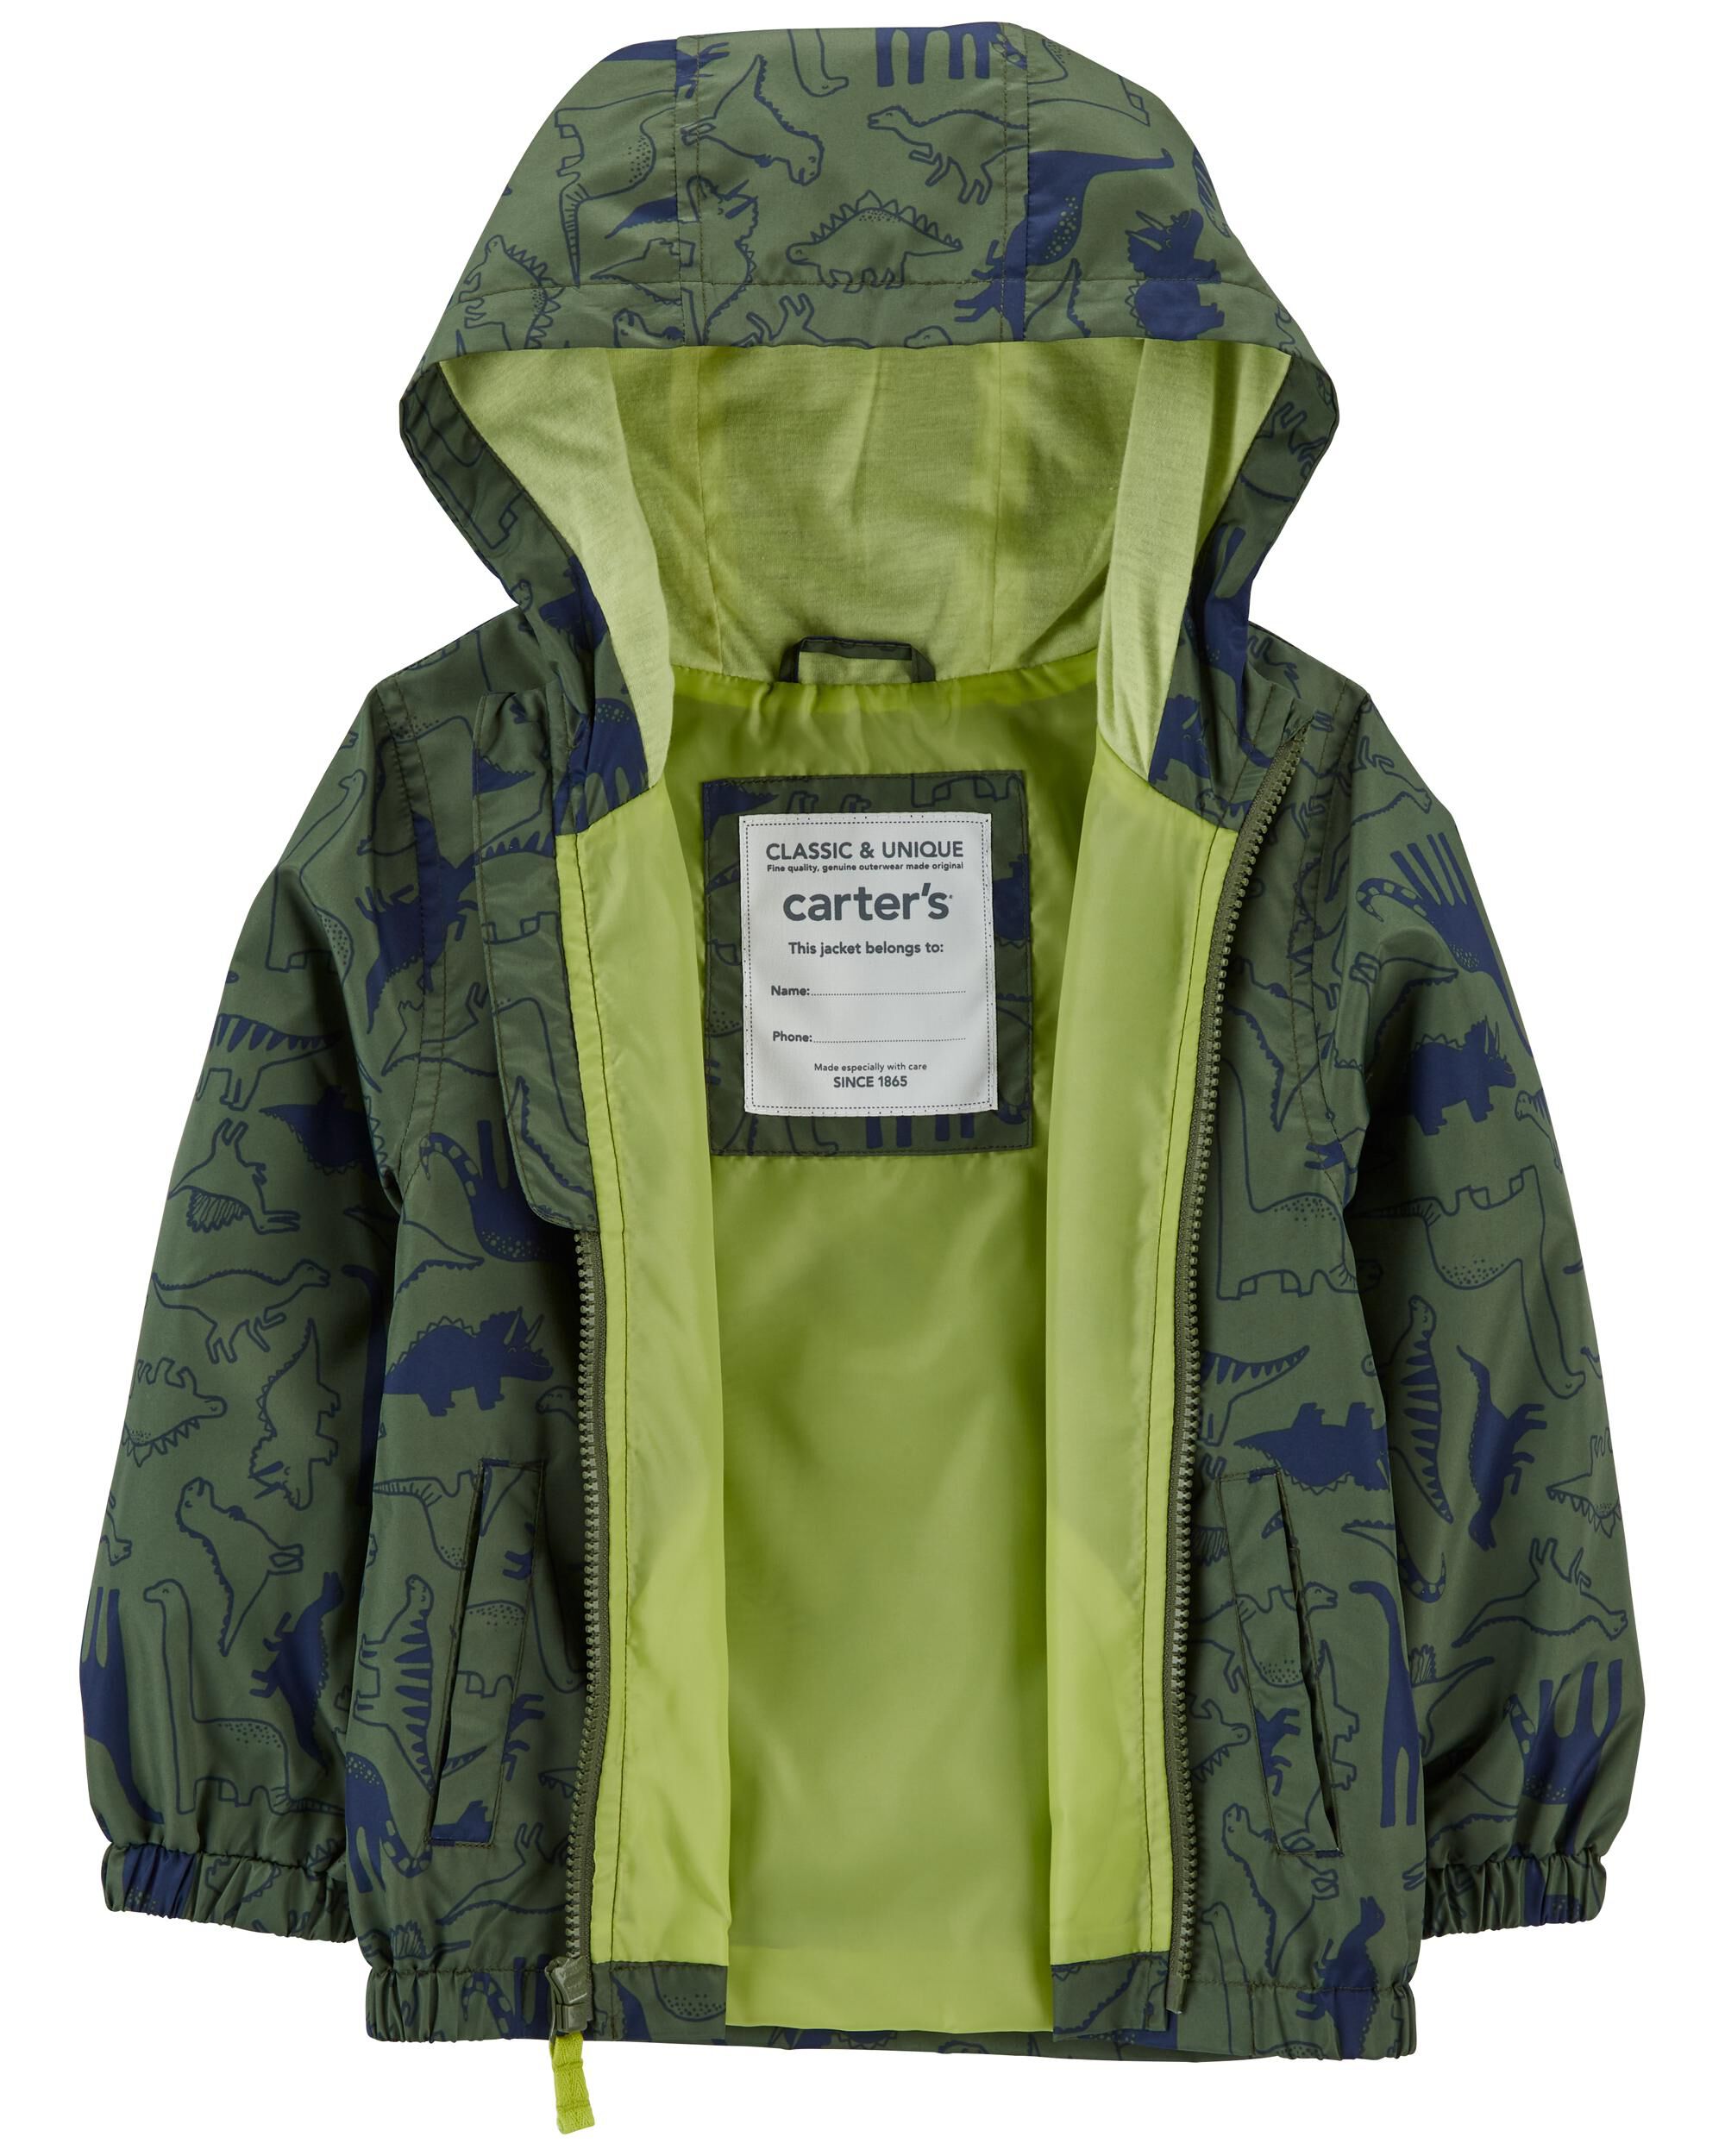 Carter's Infant Boys Grey & Green Fleece Lined Jacket Size 12M 18M 24M 